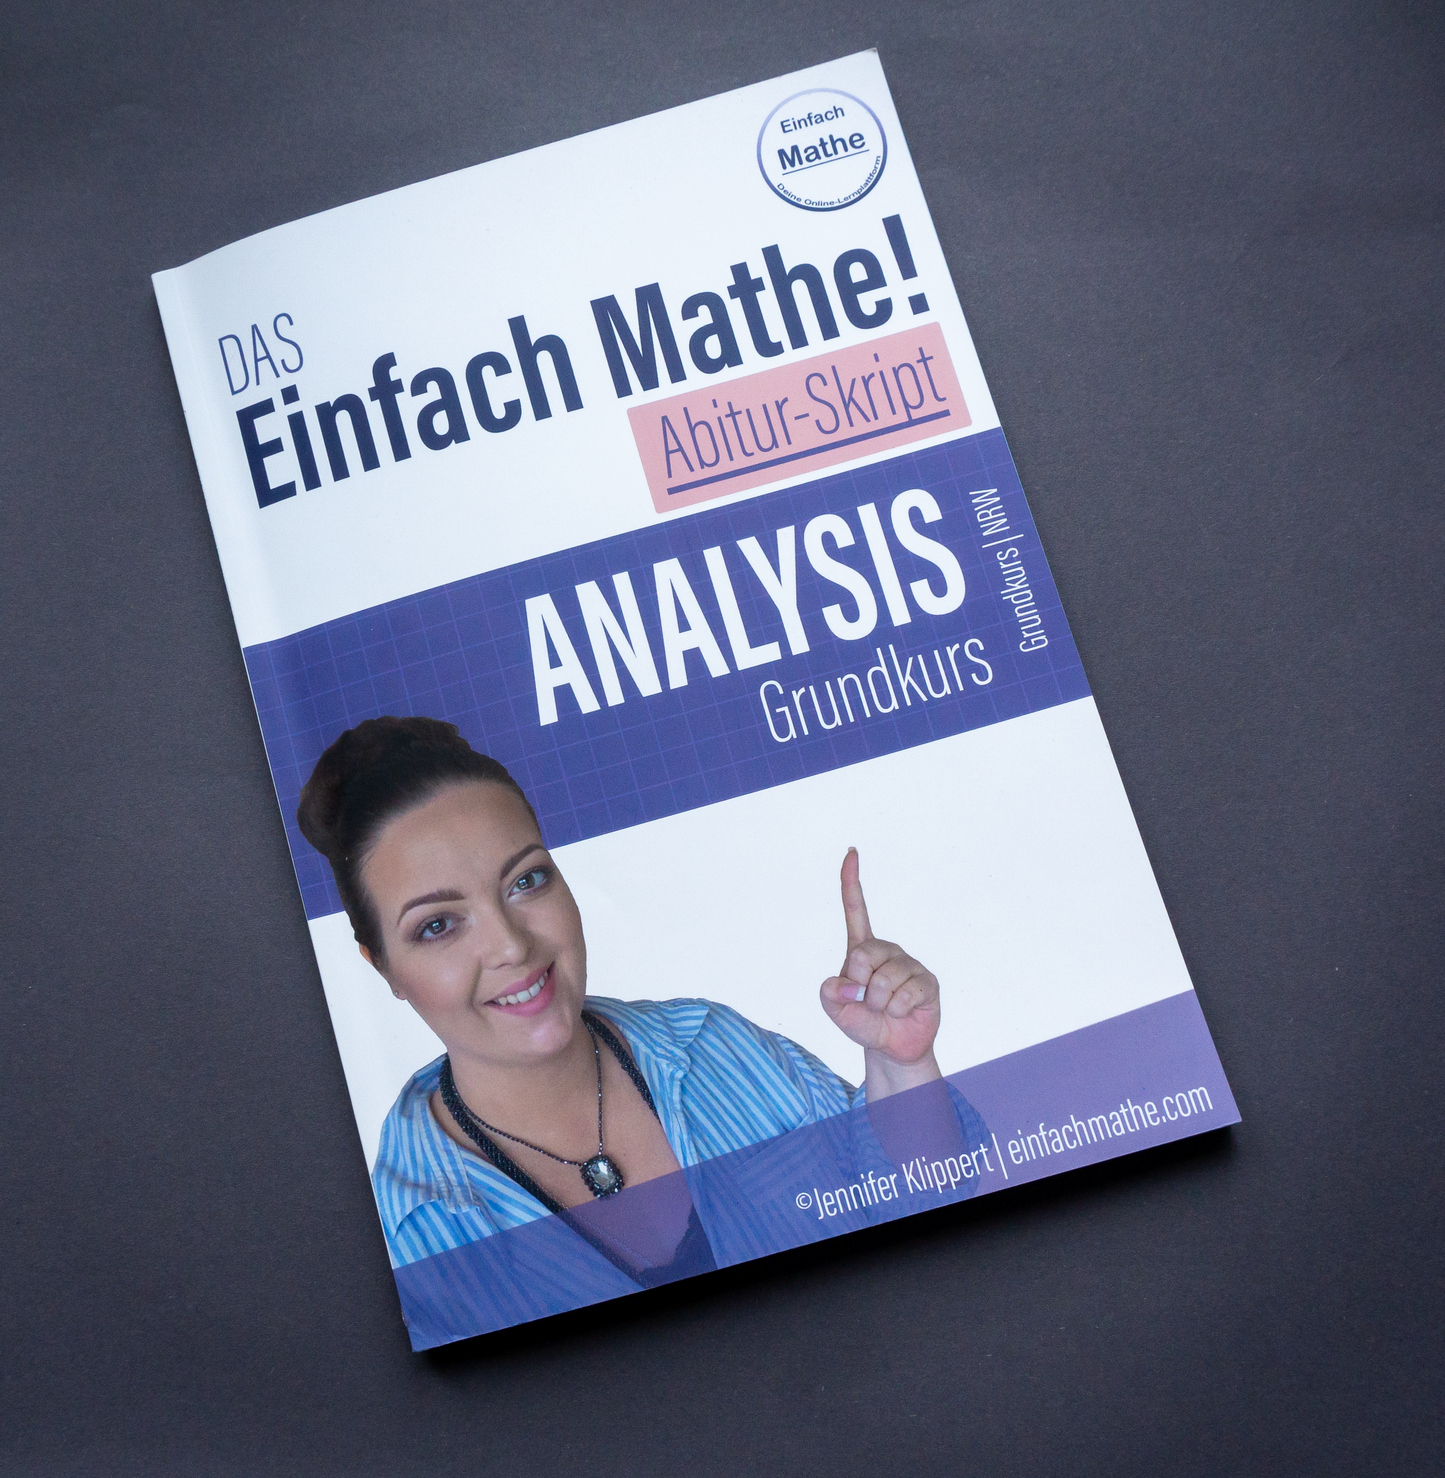 Mathe Abitur Skript - Analysis - Grundkurs